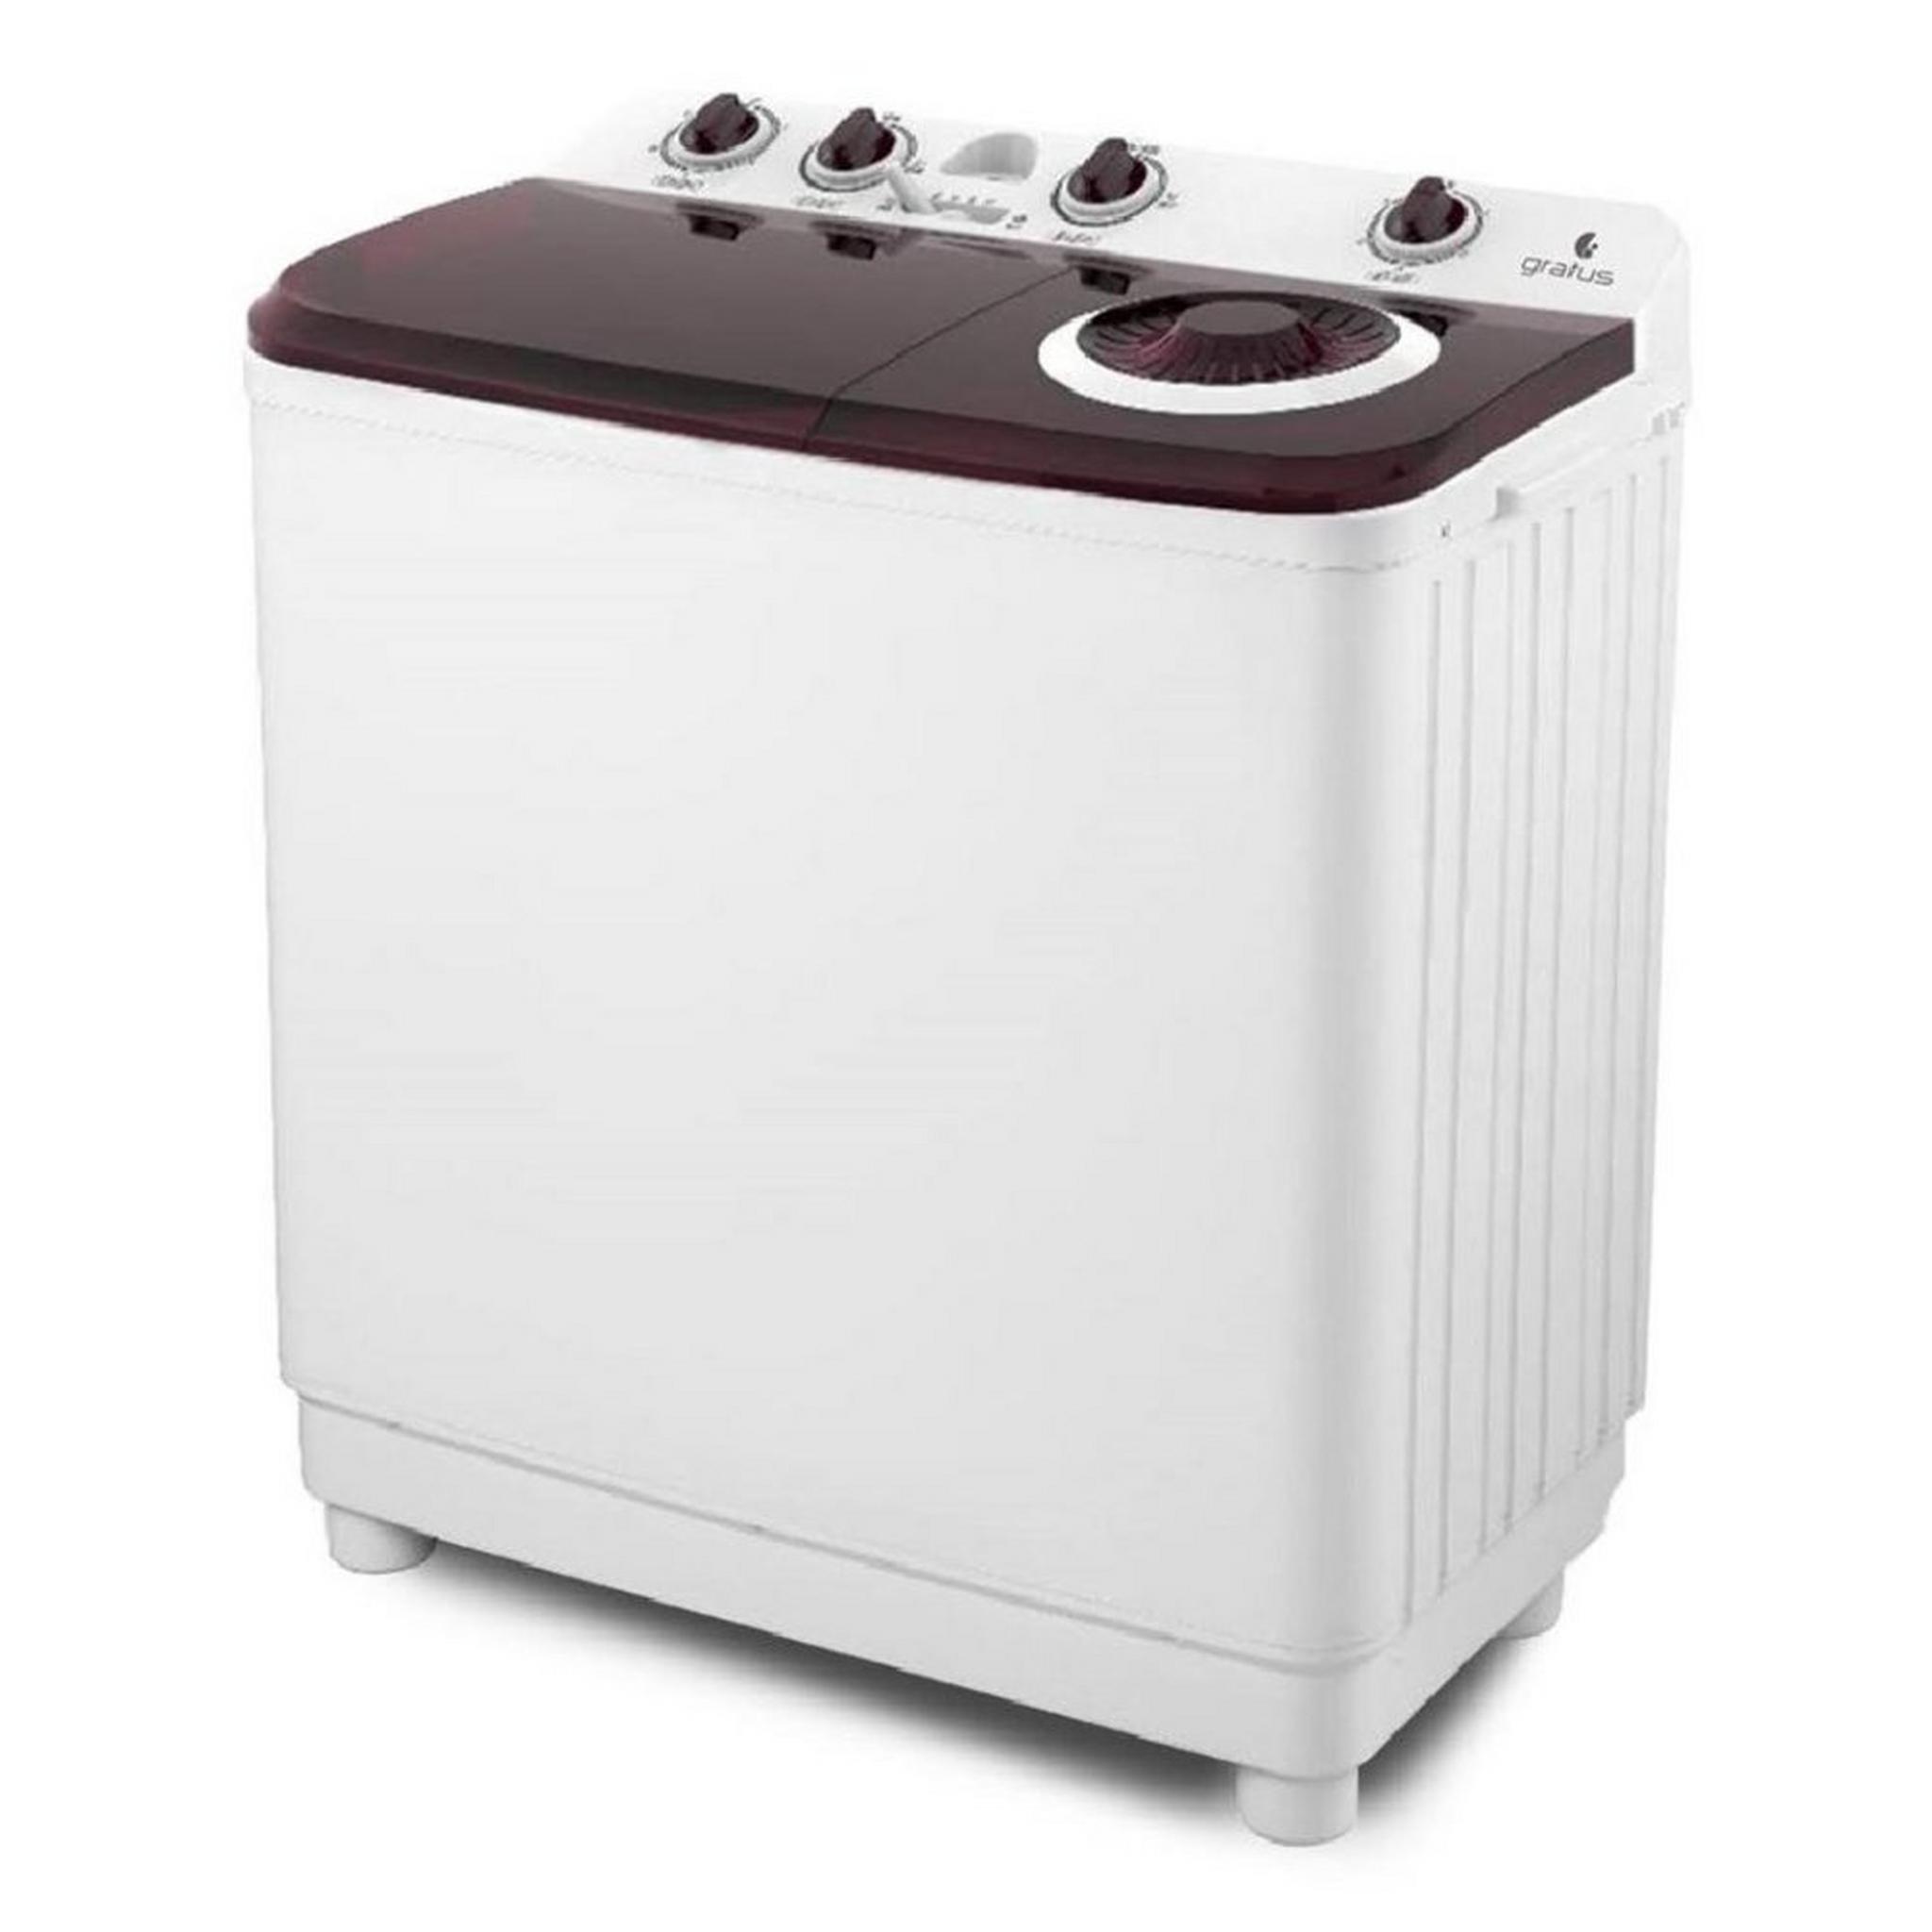 Gratus Twin Tub Washer, 15kg Washing capacity, 8kg Spin capacity, GSWM15KCDX1 – White & Gray